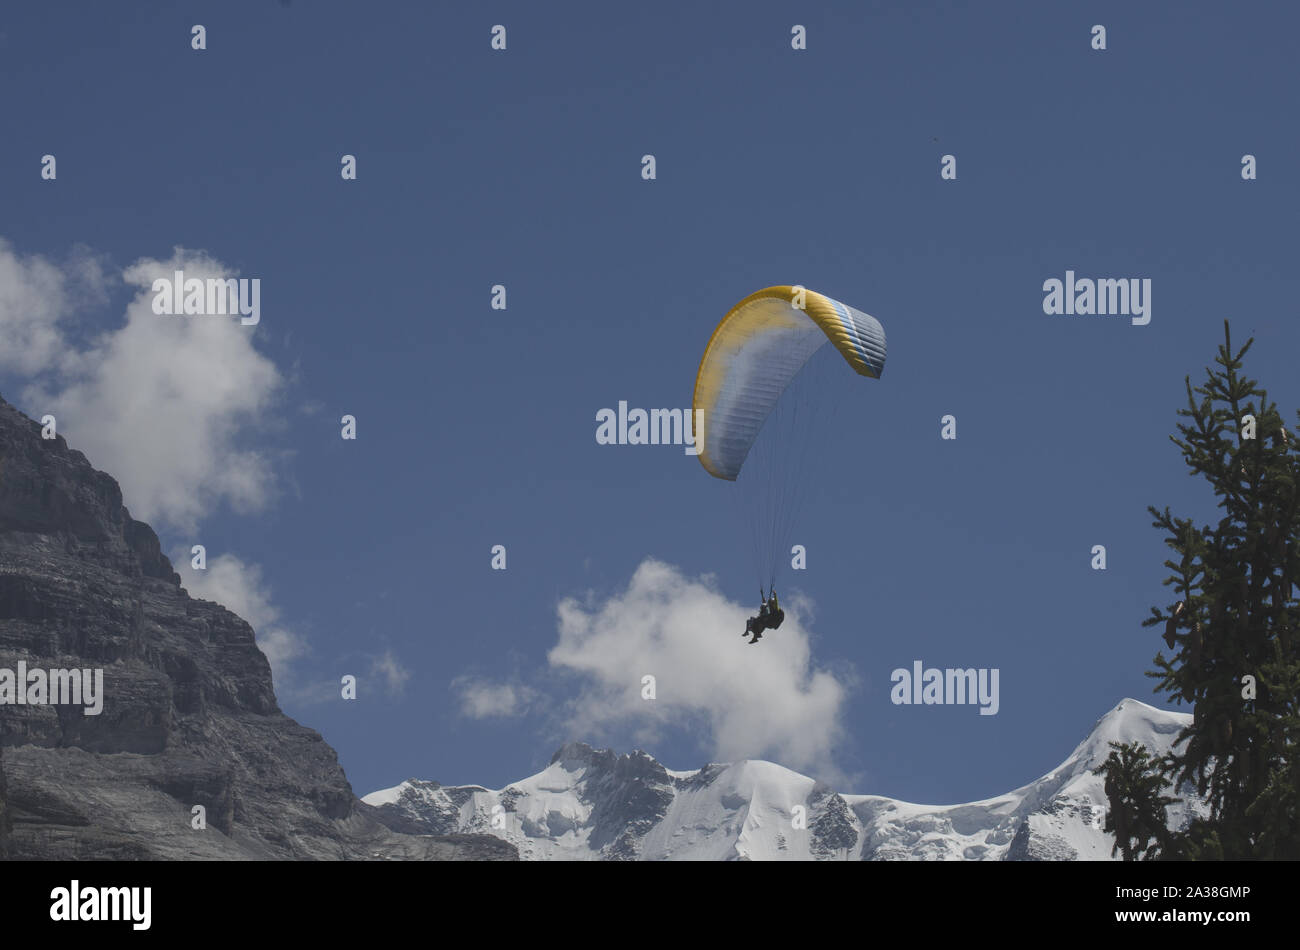 Man paragliding above mountains, Switzerland Stock Photo